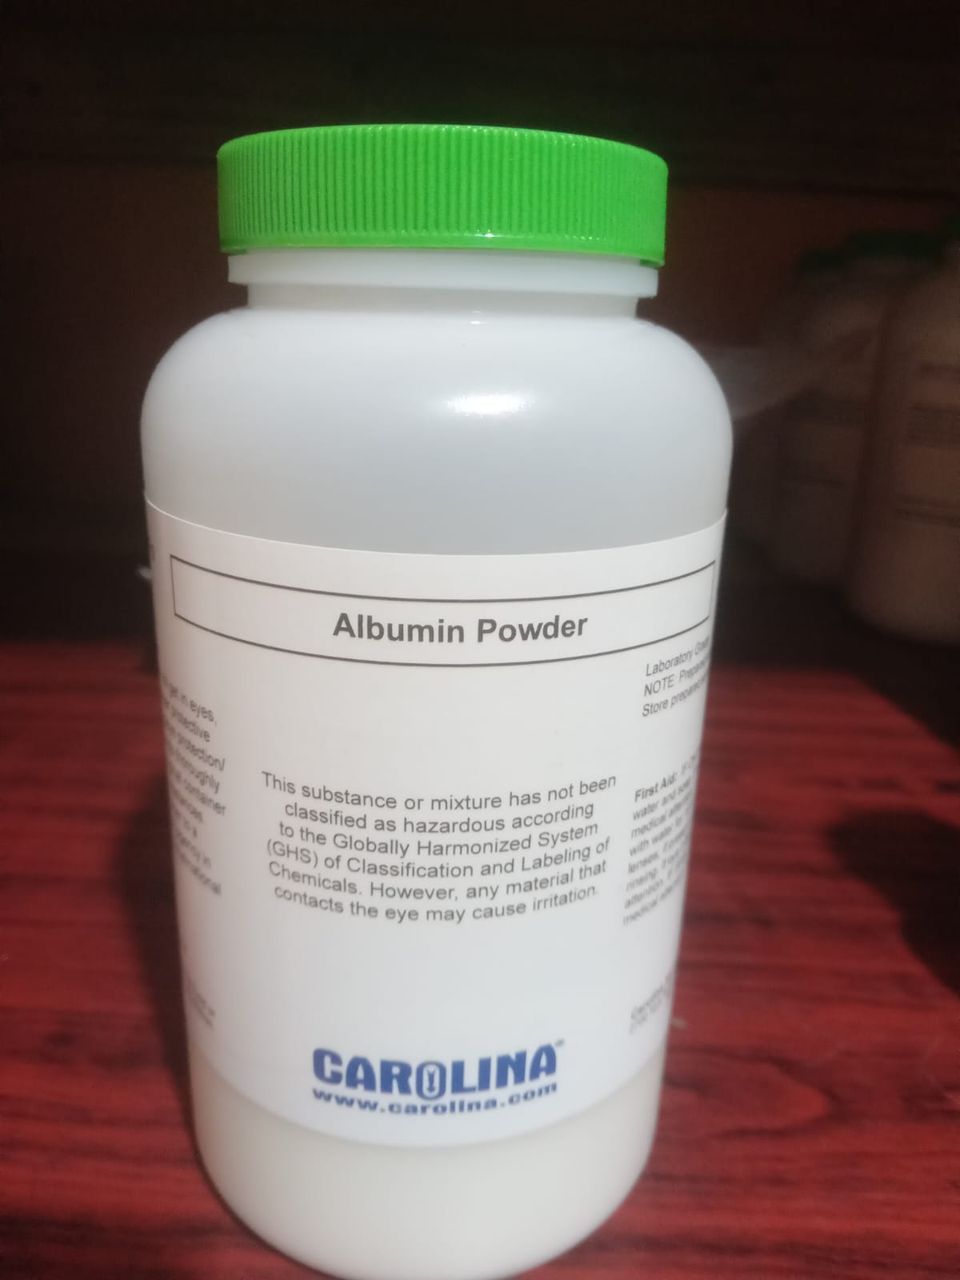 Albumin powder